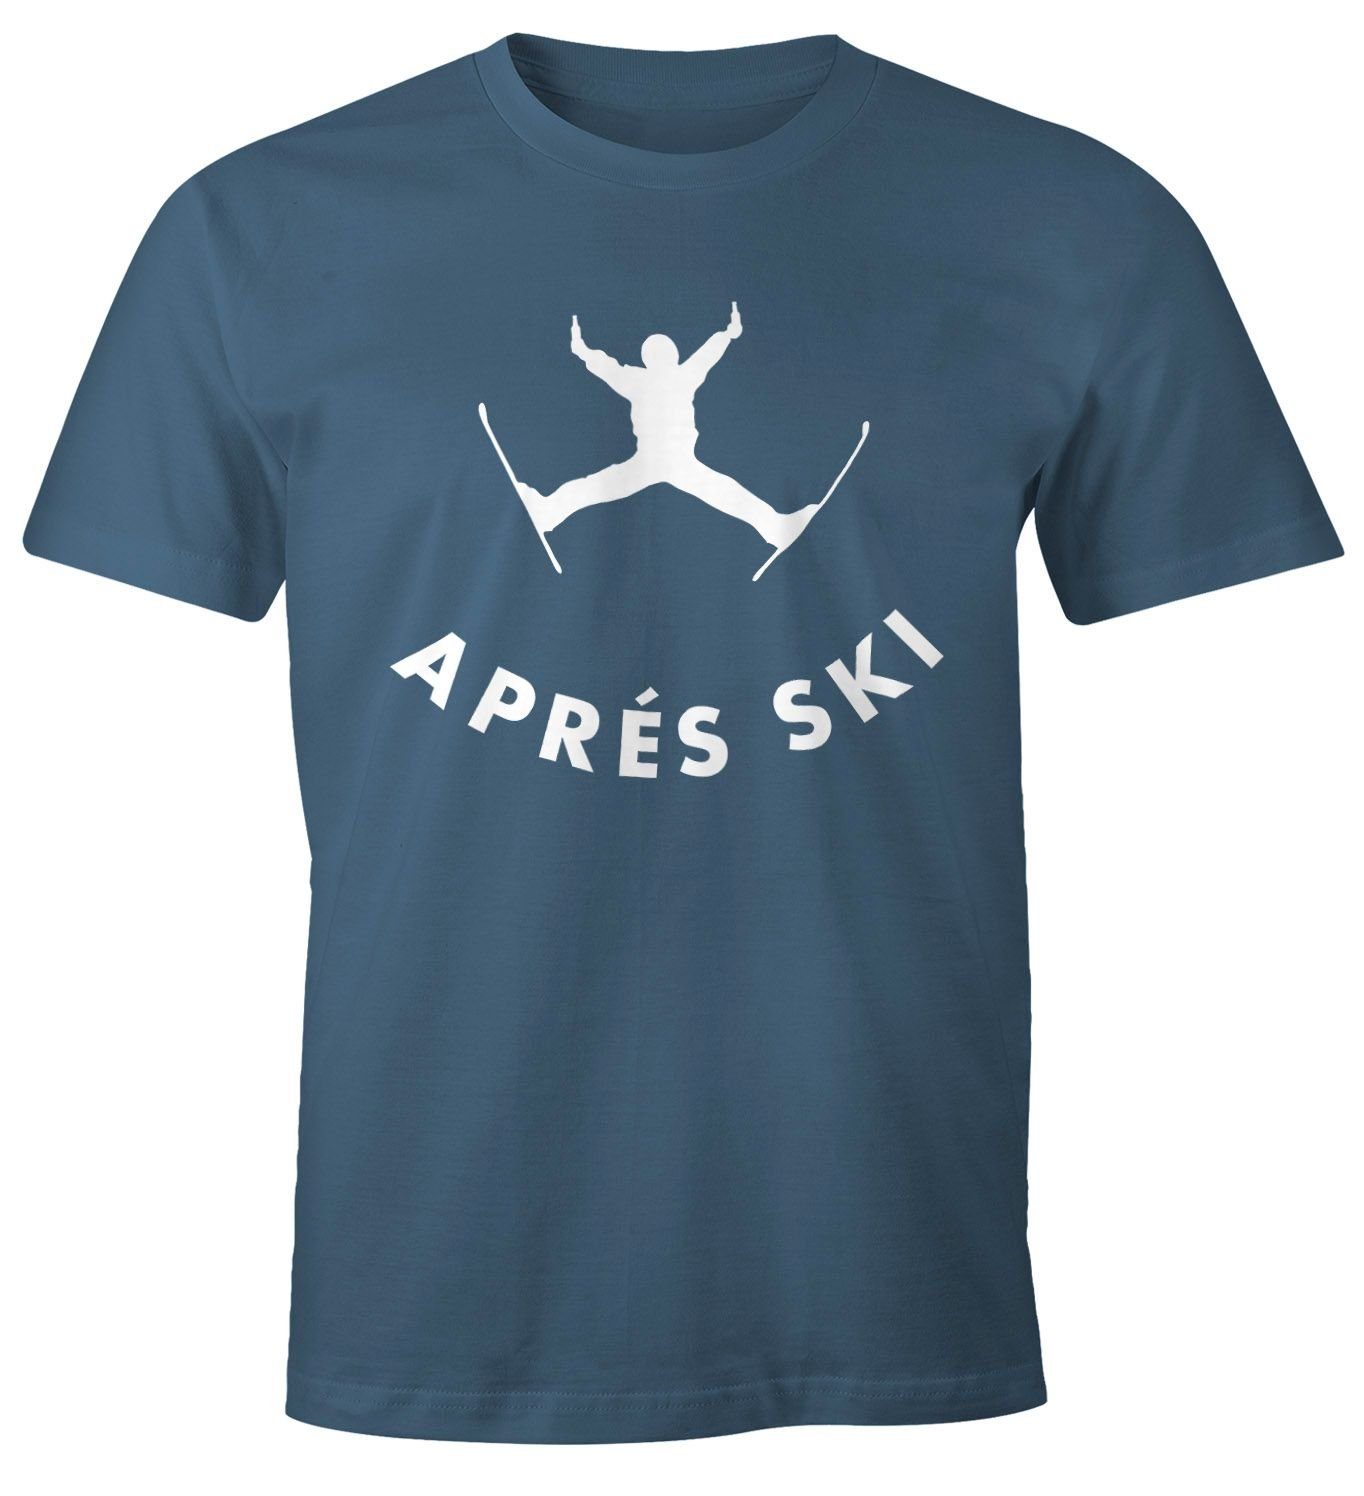 MoonWorks Fun-Shirt Print Herren Sprung Print-Shirt blau Moonworks® Ski T-Shirt Bier mit Apres